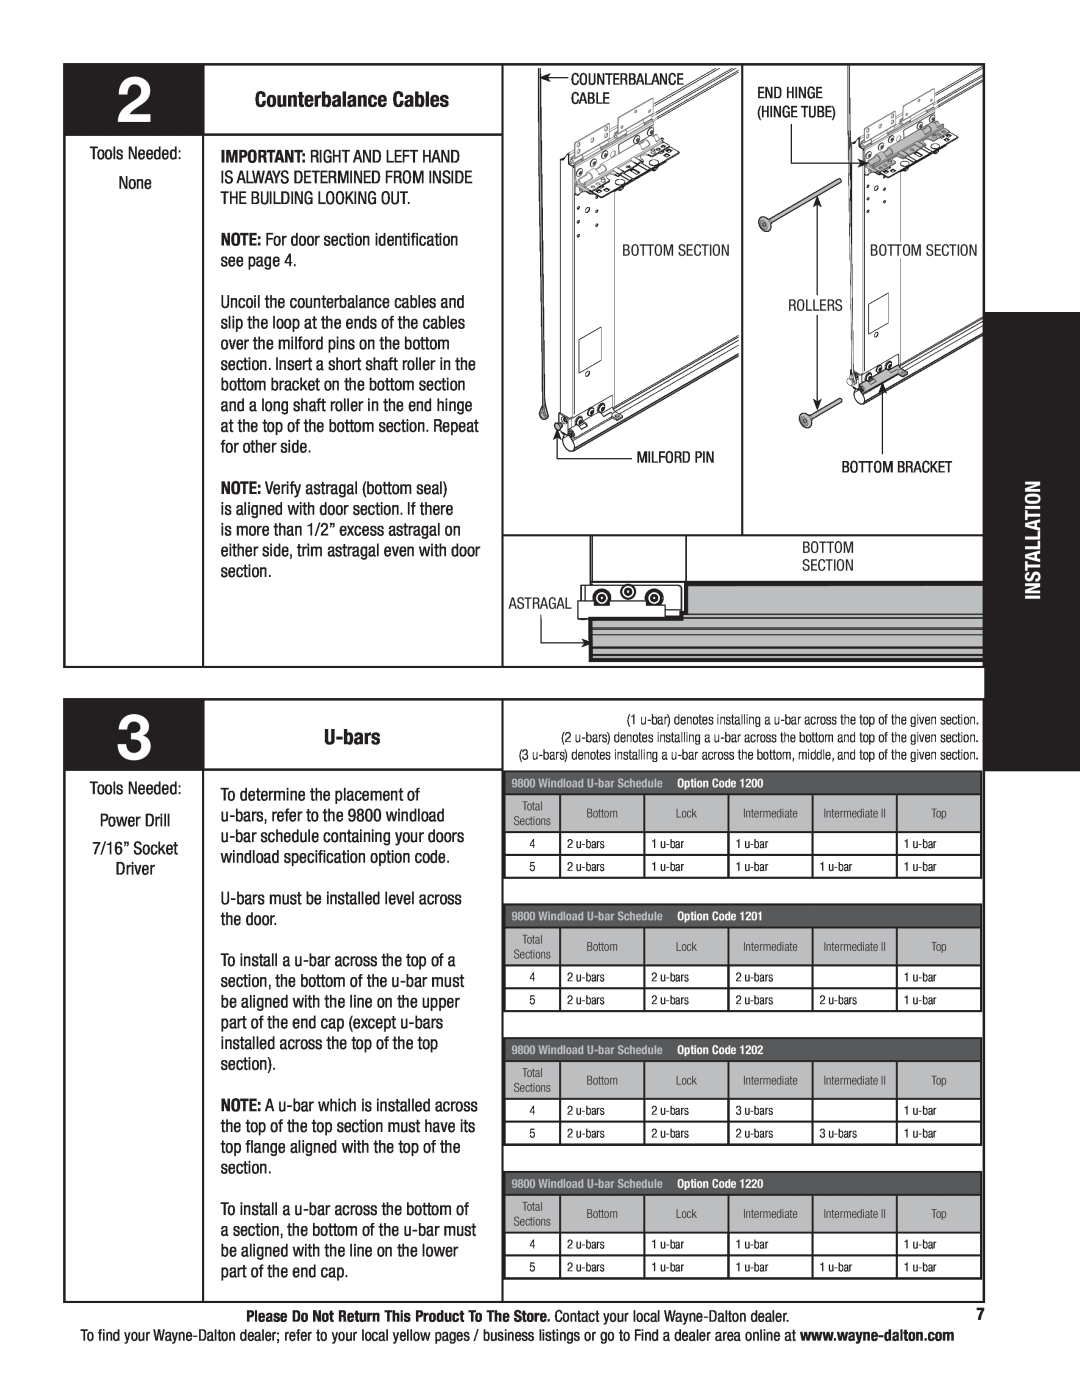 Wayne-Dalton 9800 installation instructions Counterbalance Cables, U-bars 